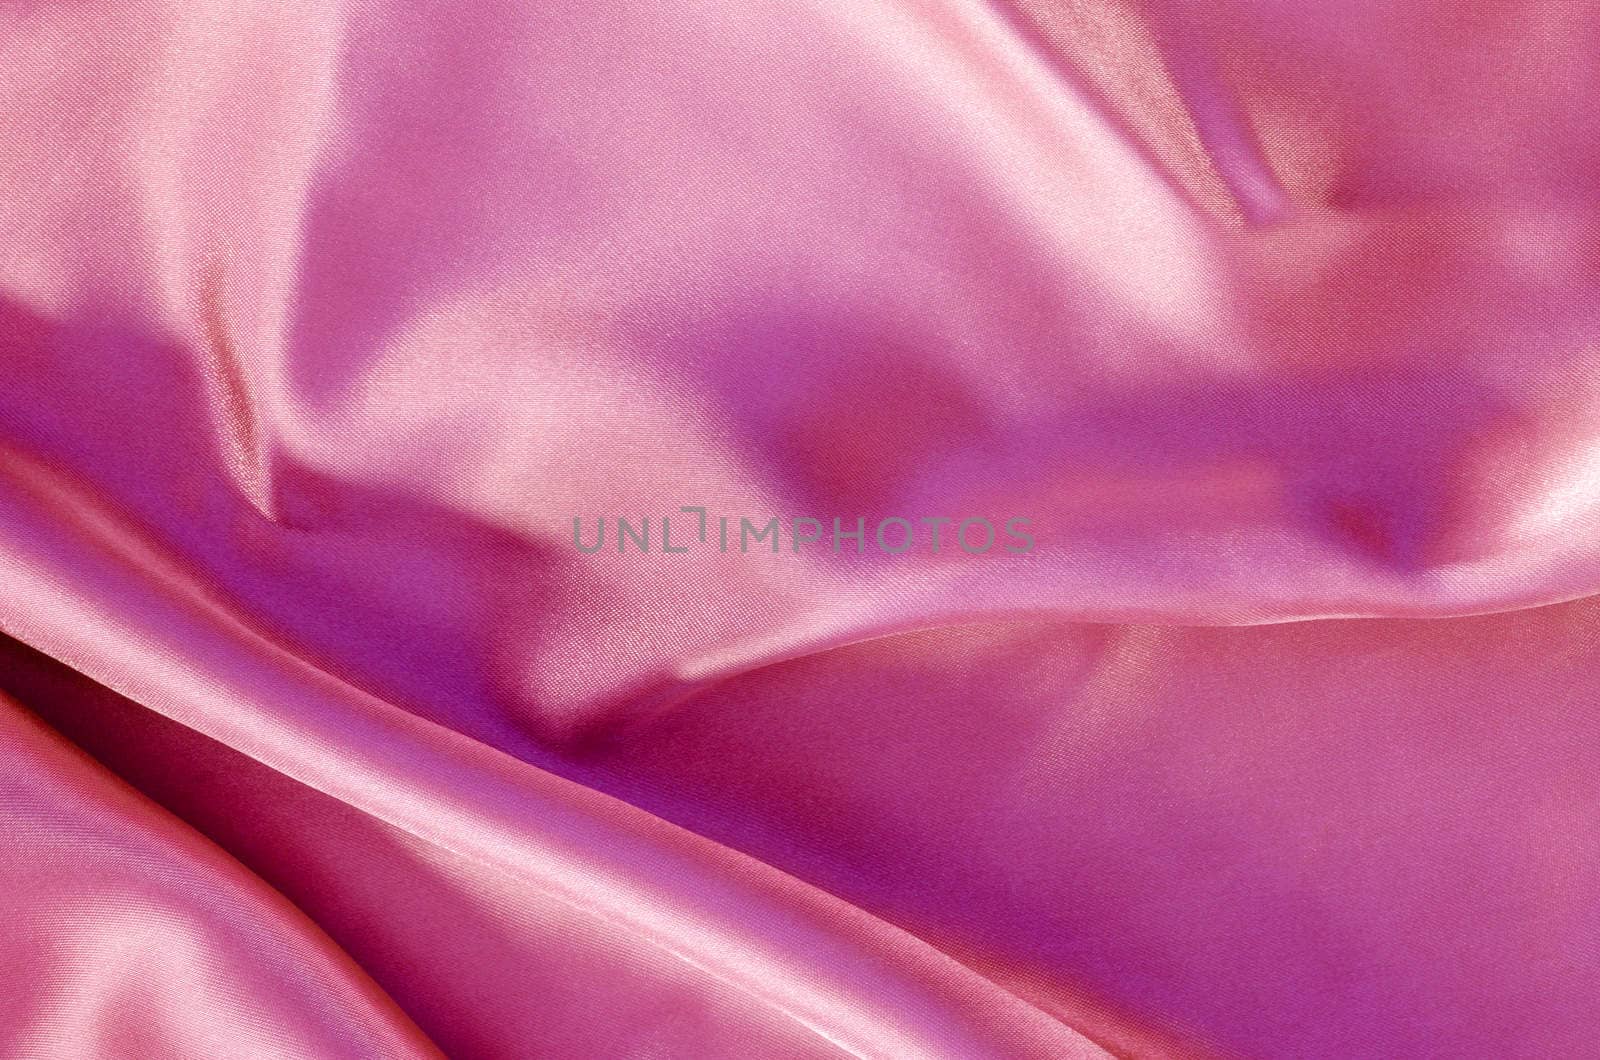 Pink Silk Fabric texture. by Gamjai